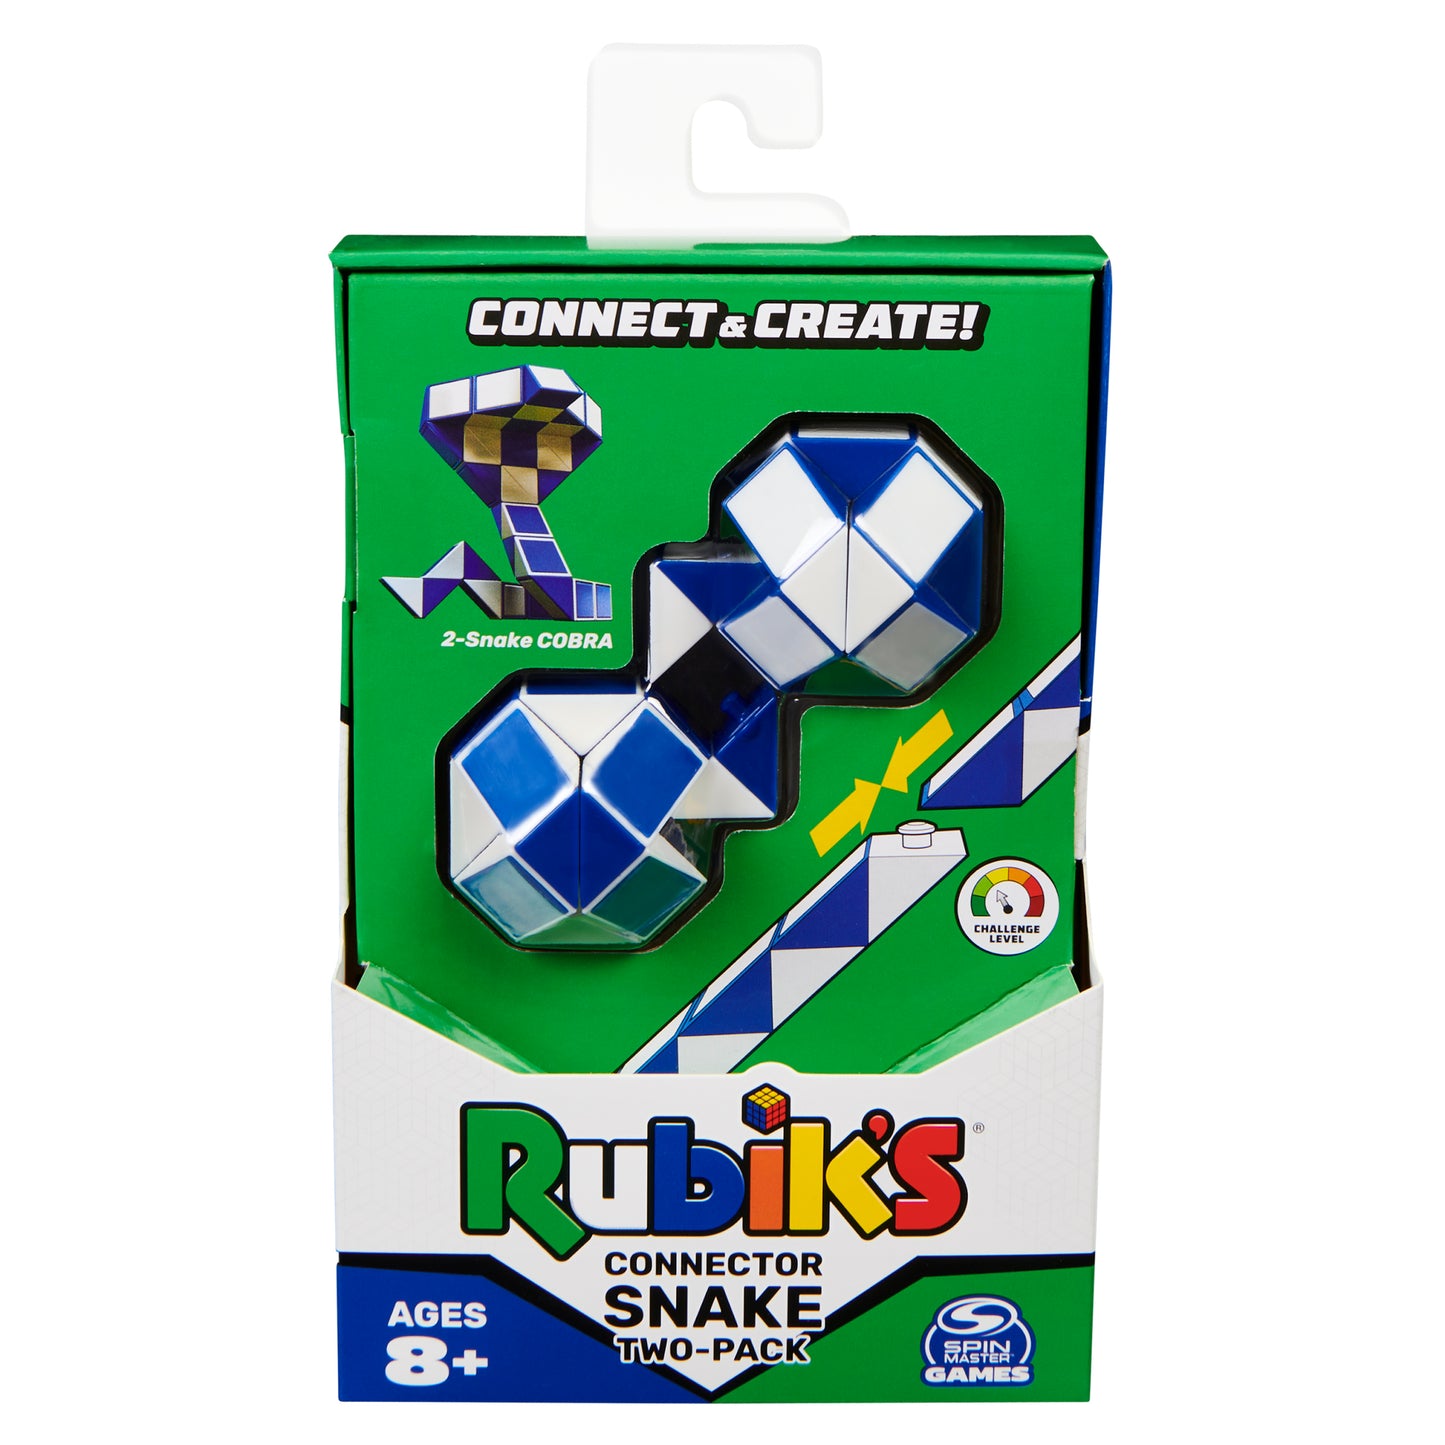 Rubik’s Connector Snake